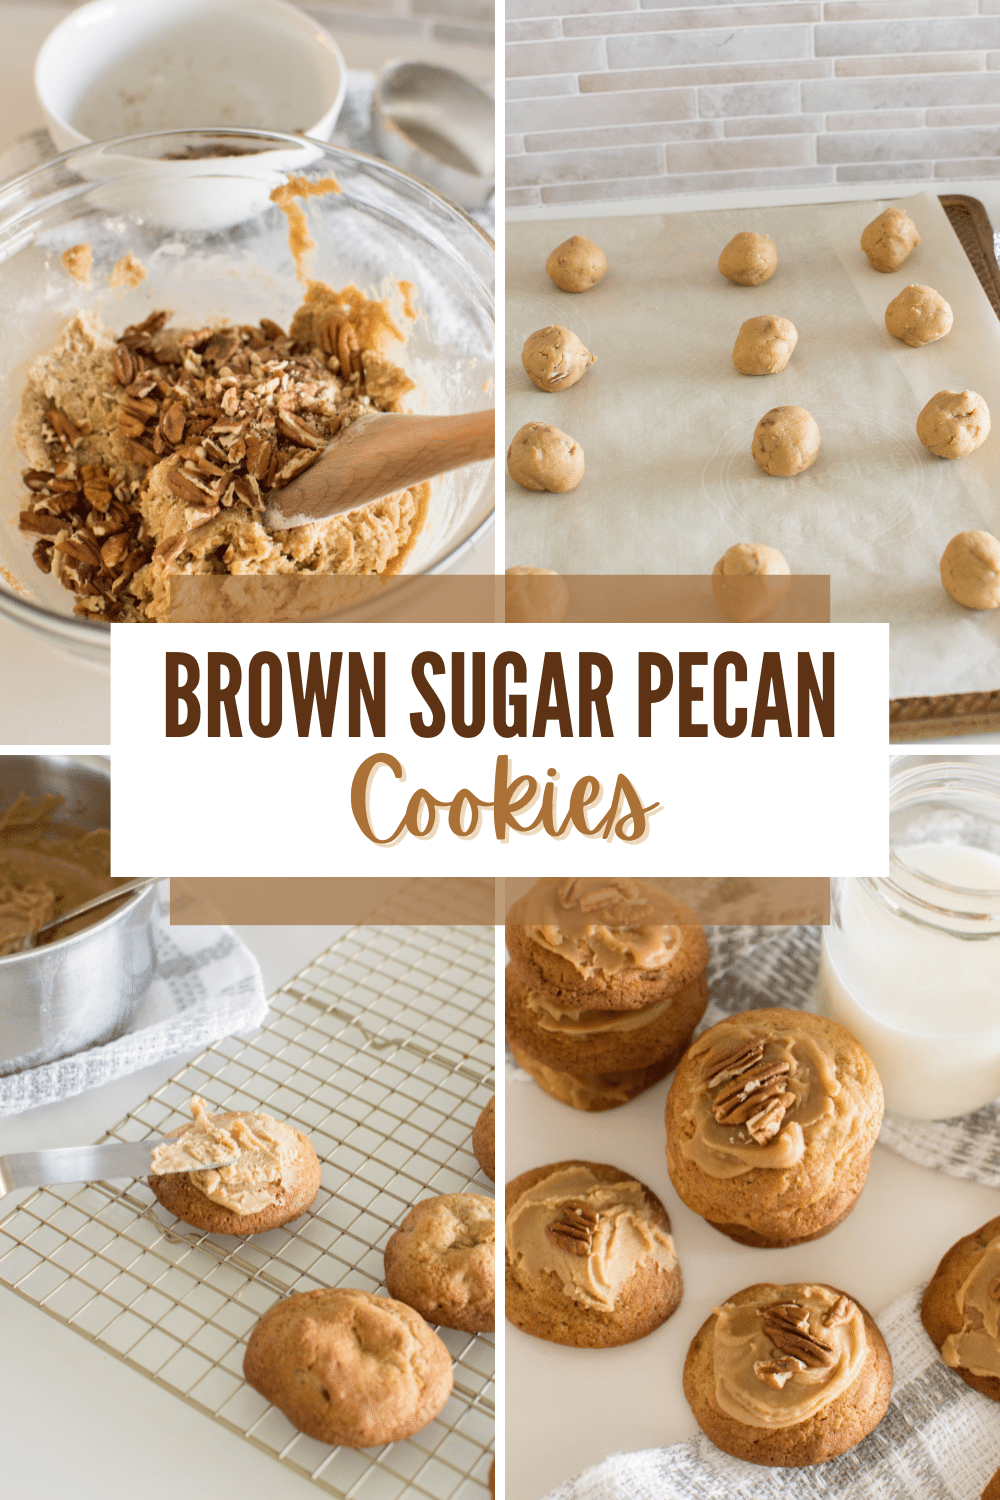 Brown sugar pecan cookies.